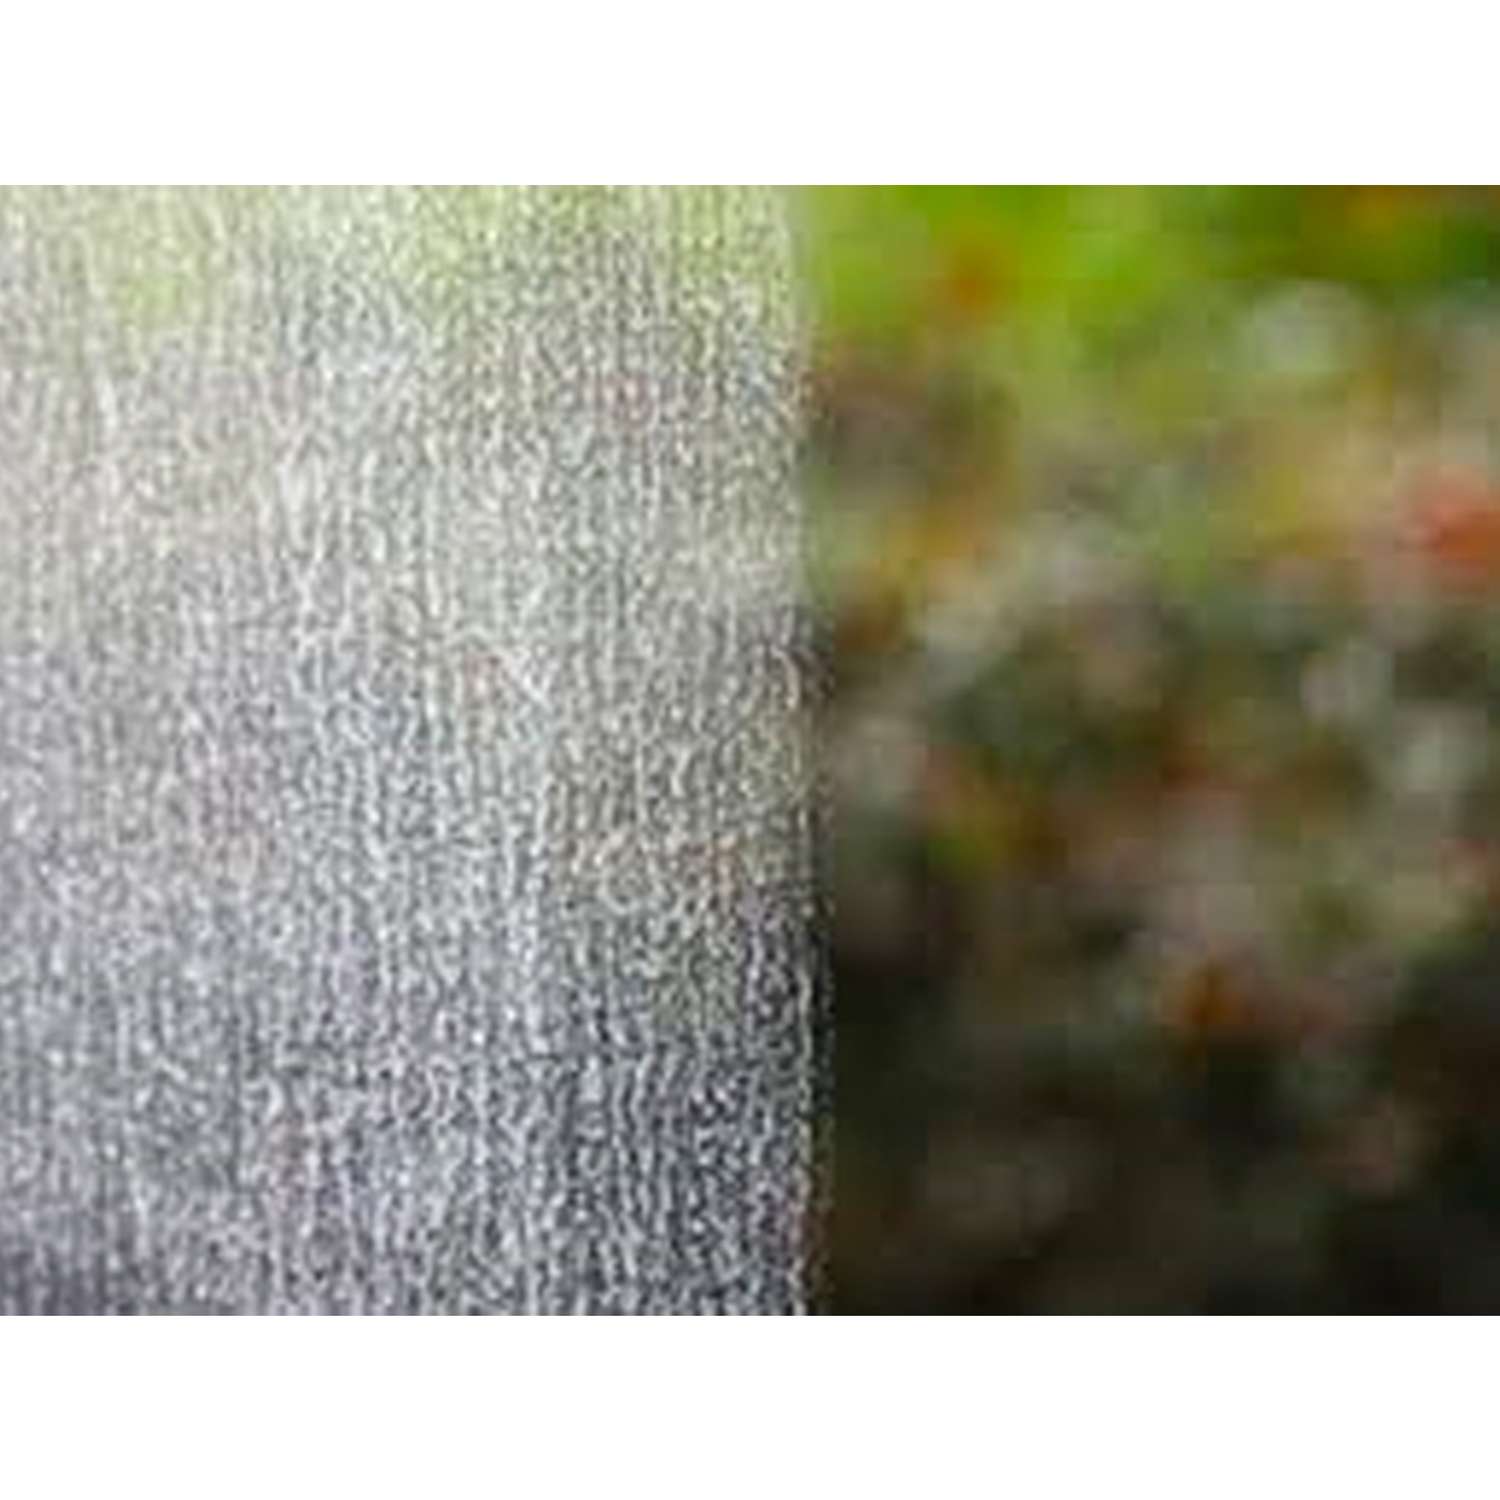 Bio-Clean WSR40 Hard Water Stain Remover, 40 oz